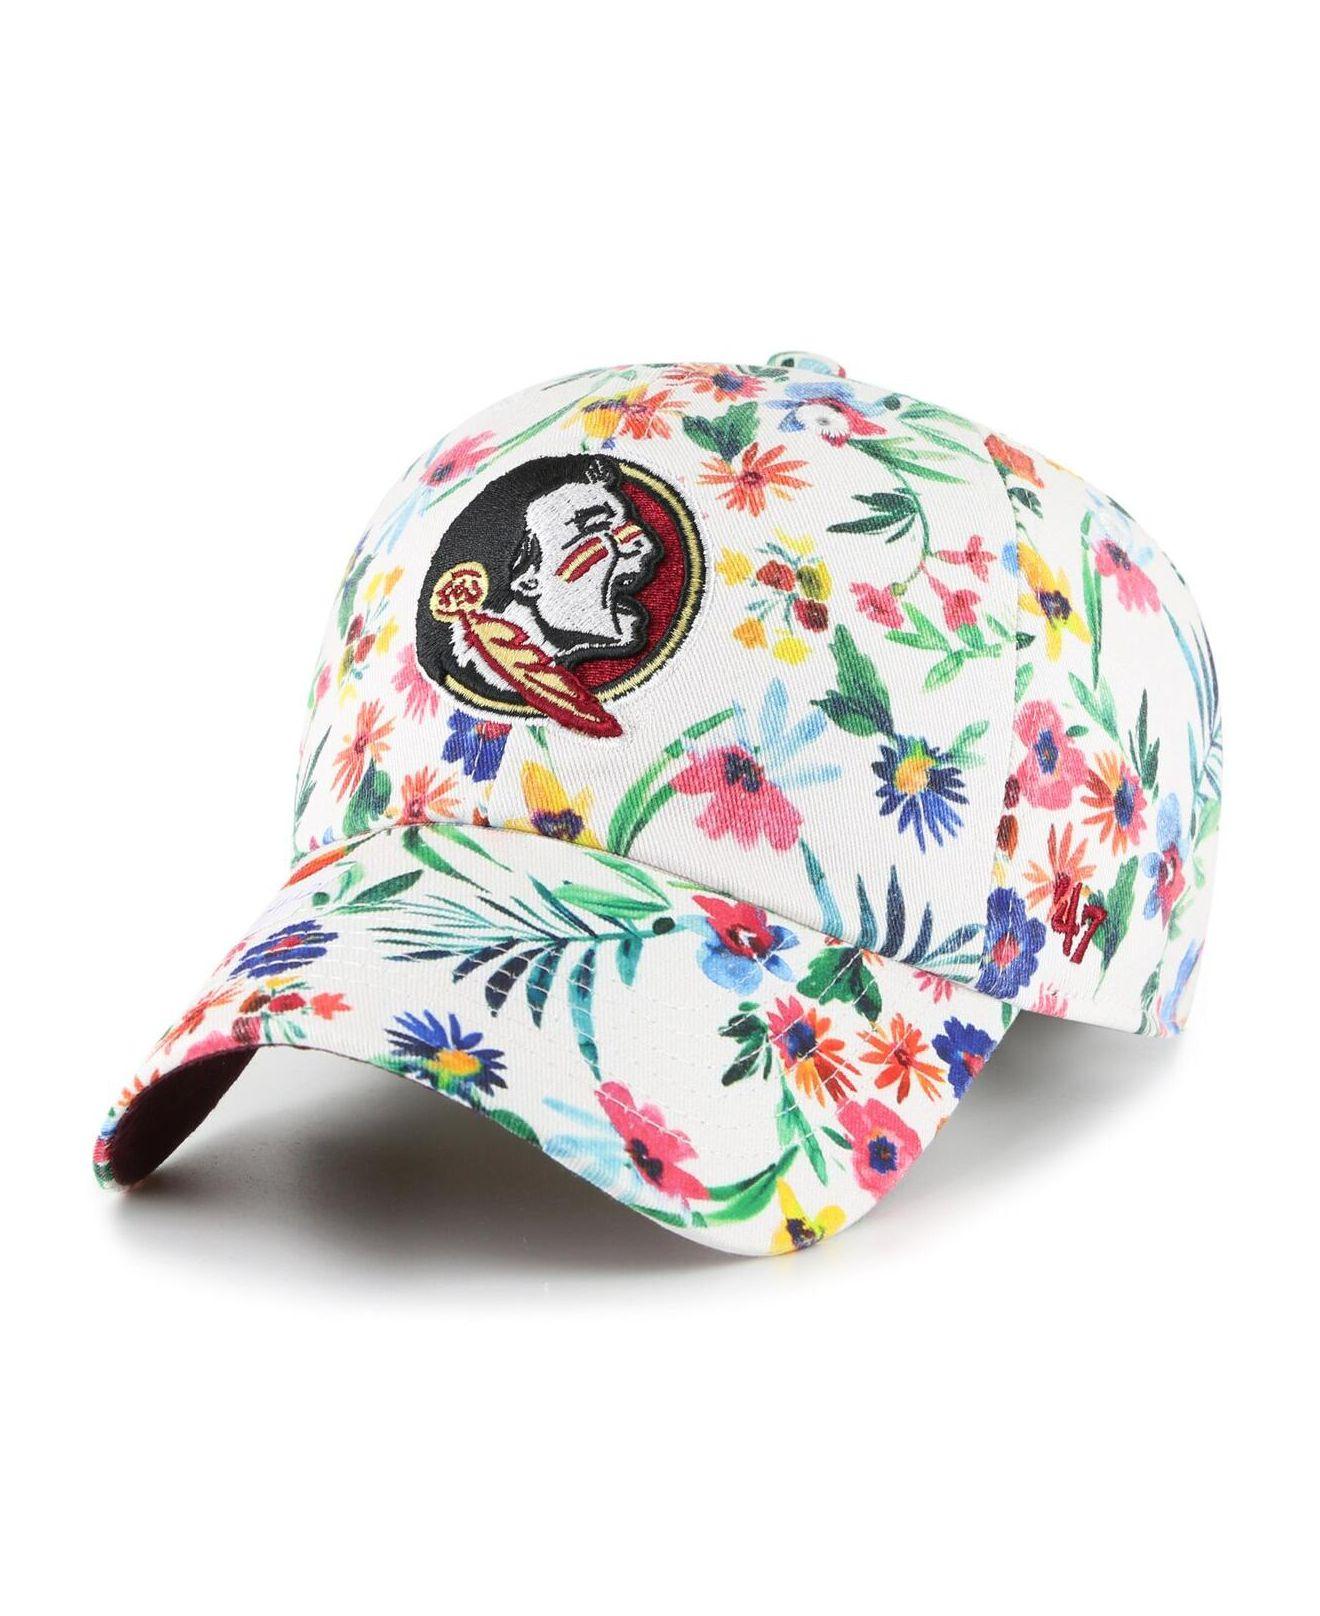 Women's '47 White Arizona Cardinals Confetti Clean Up Adjustable Hat